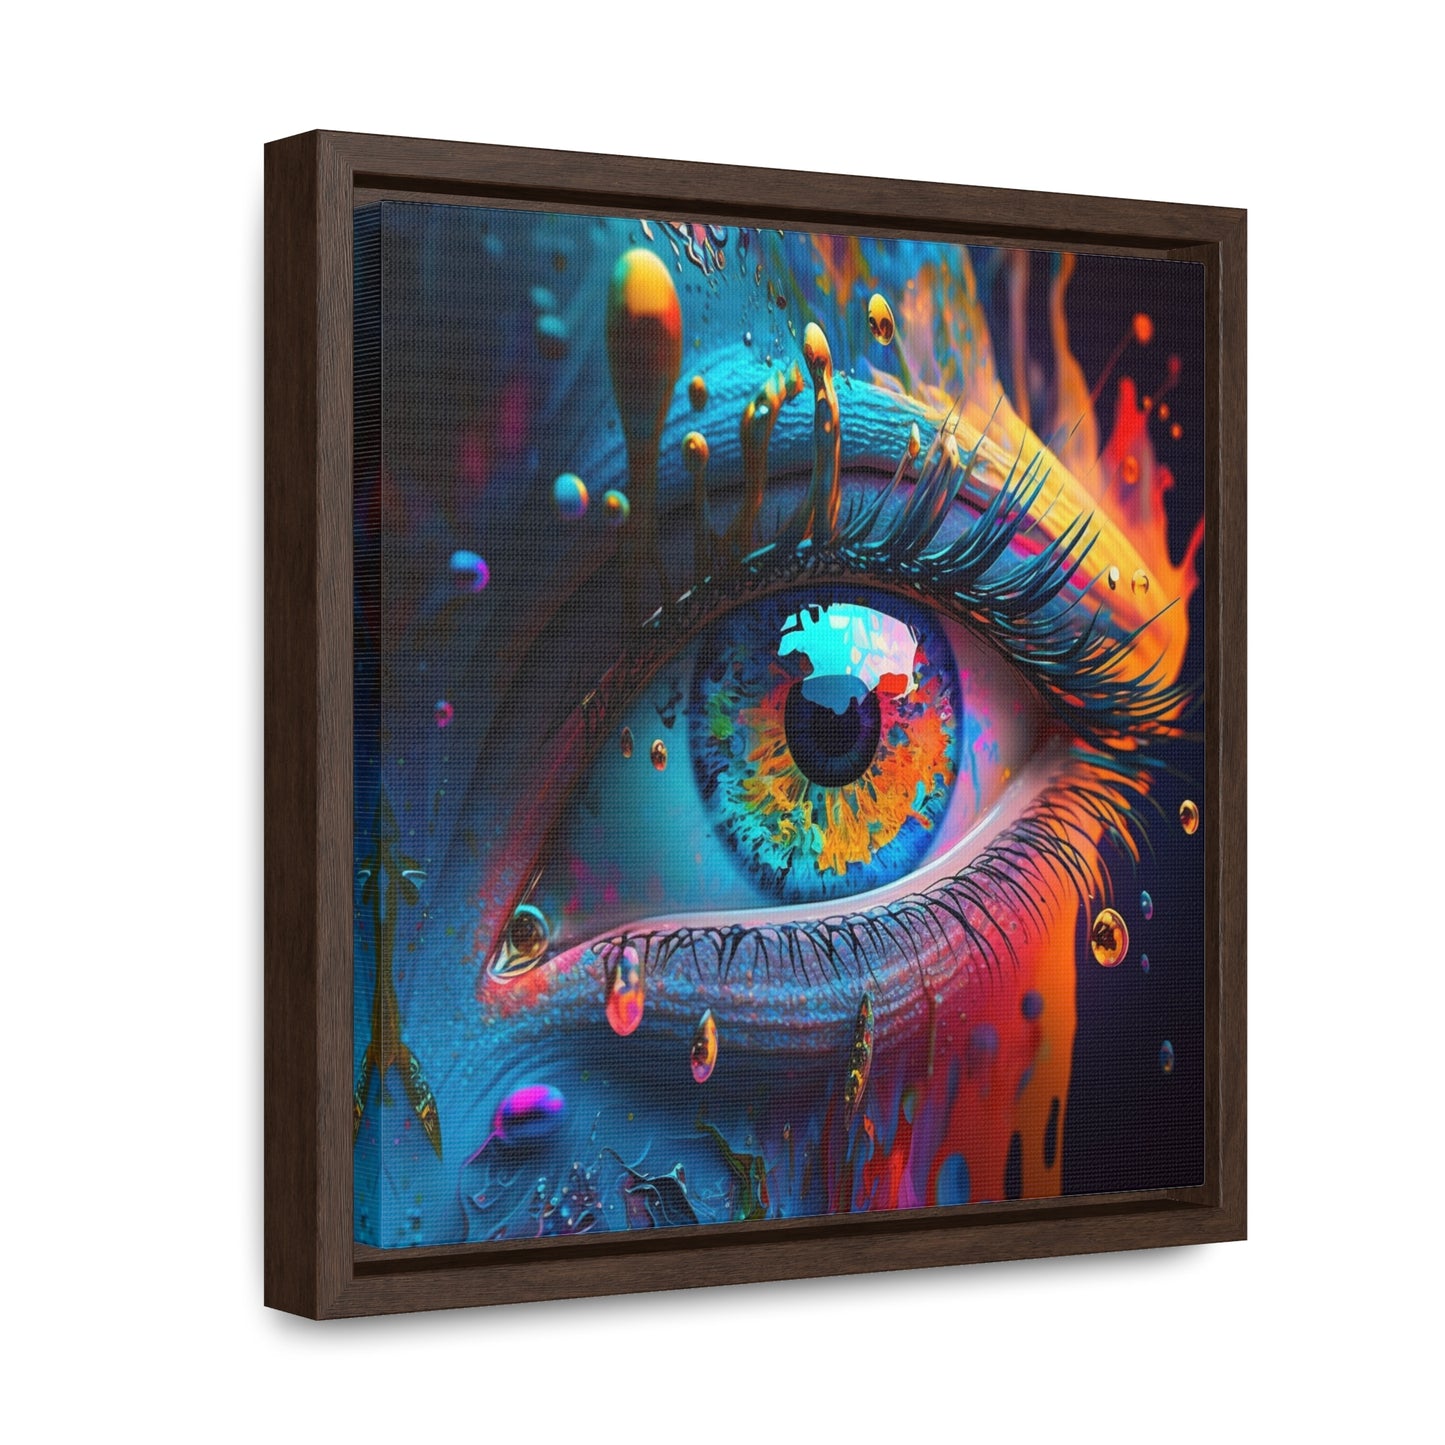 Gallery Canvas Wraps, Square Frame Macro Eye Photo 1